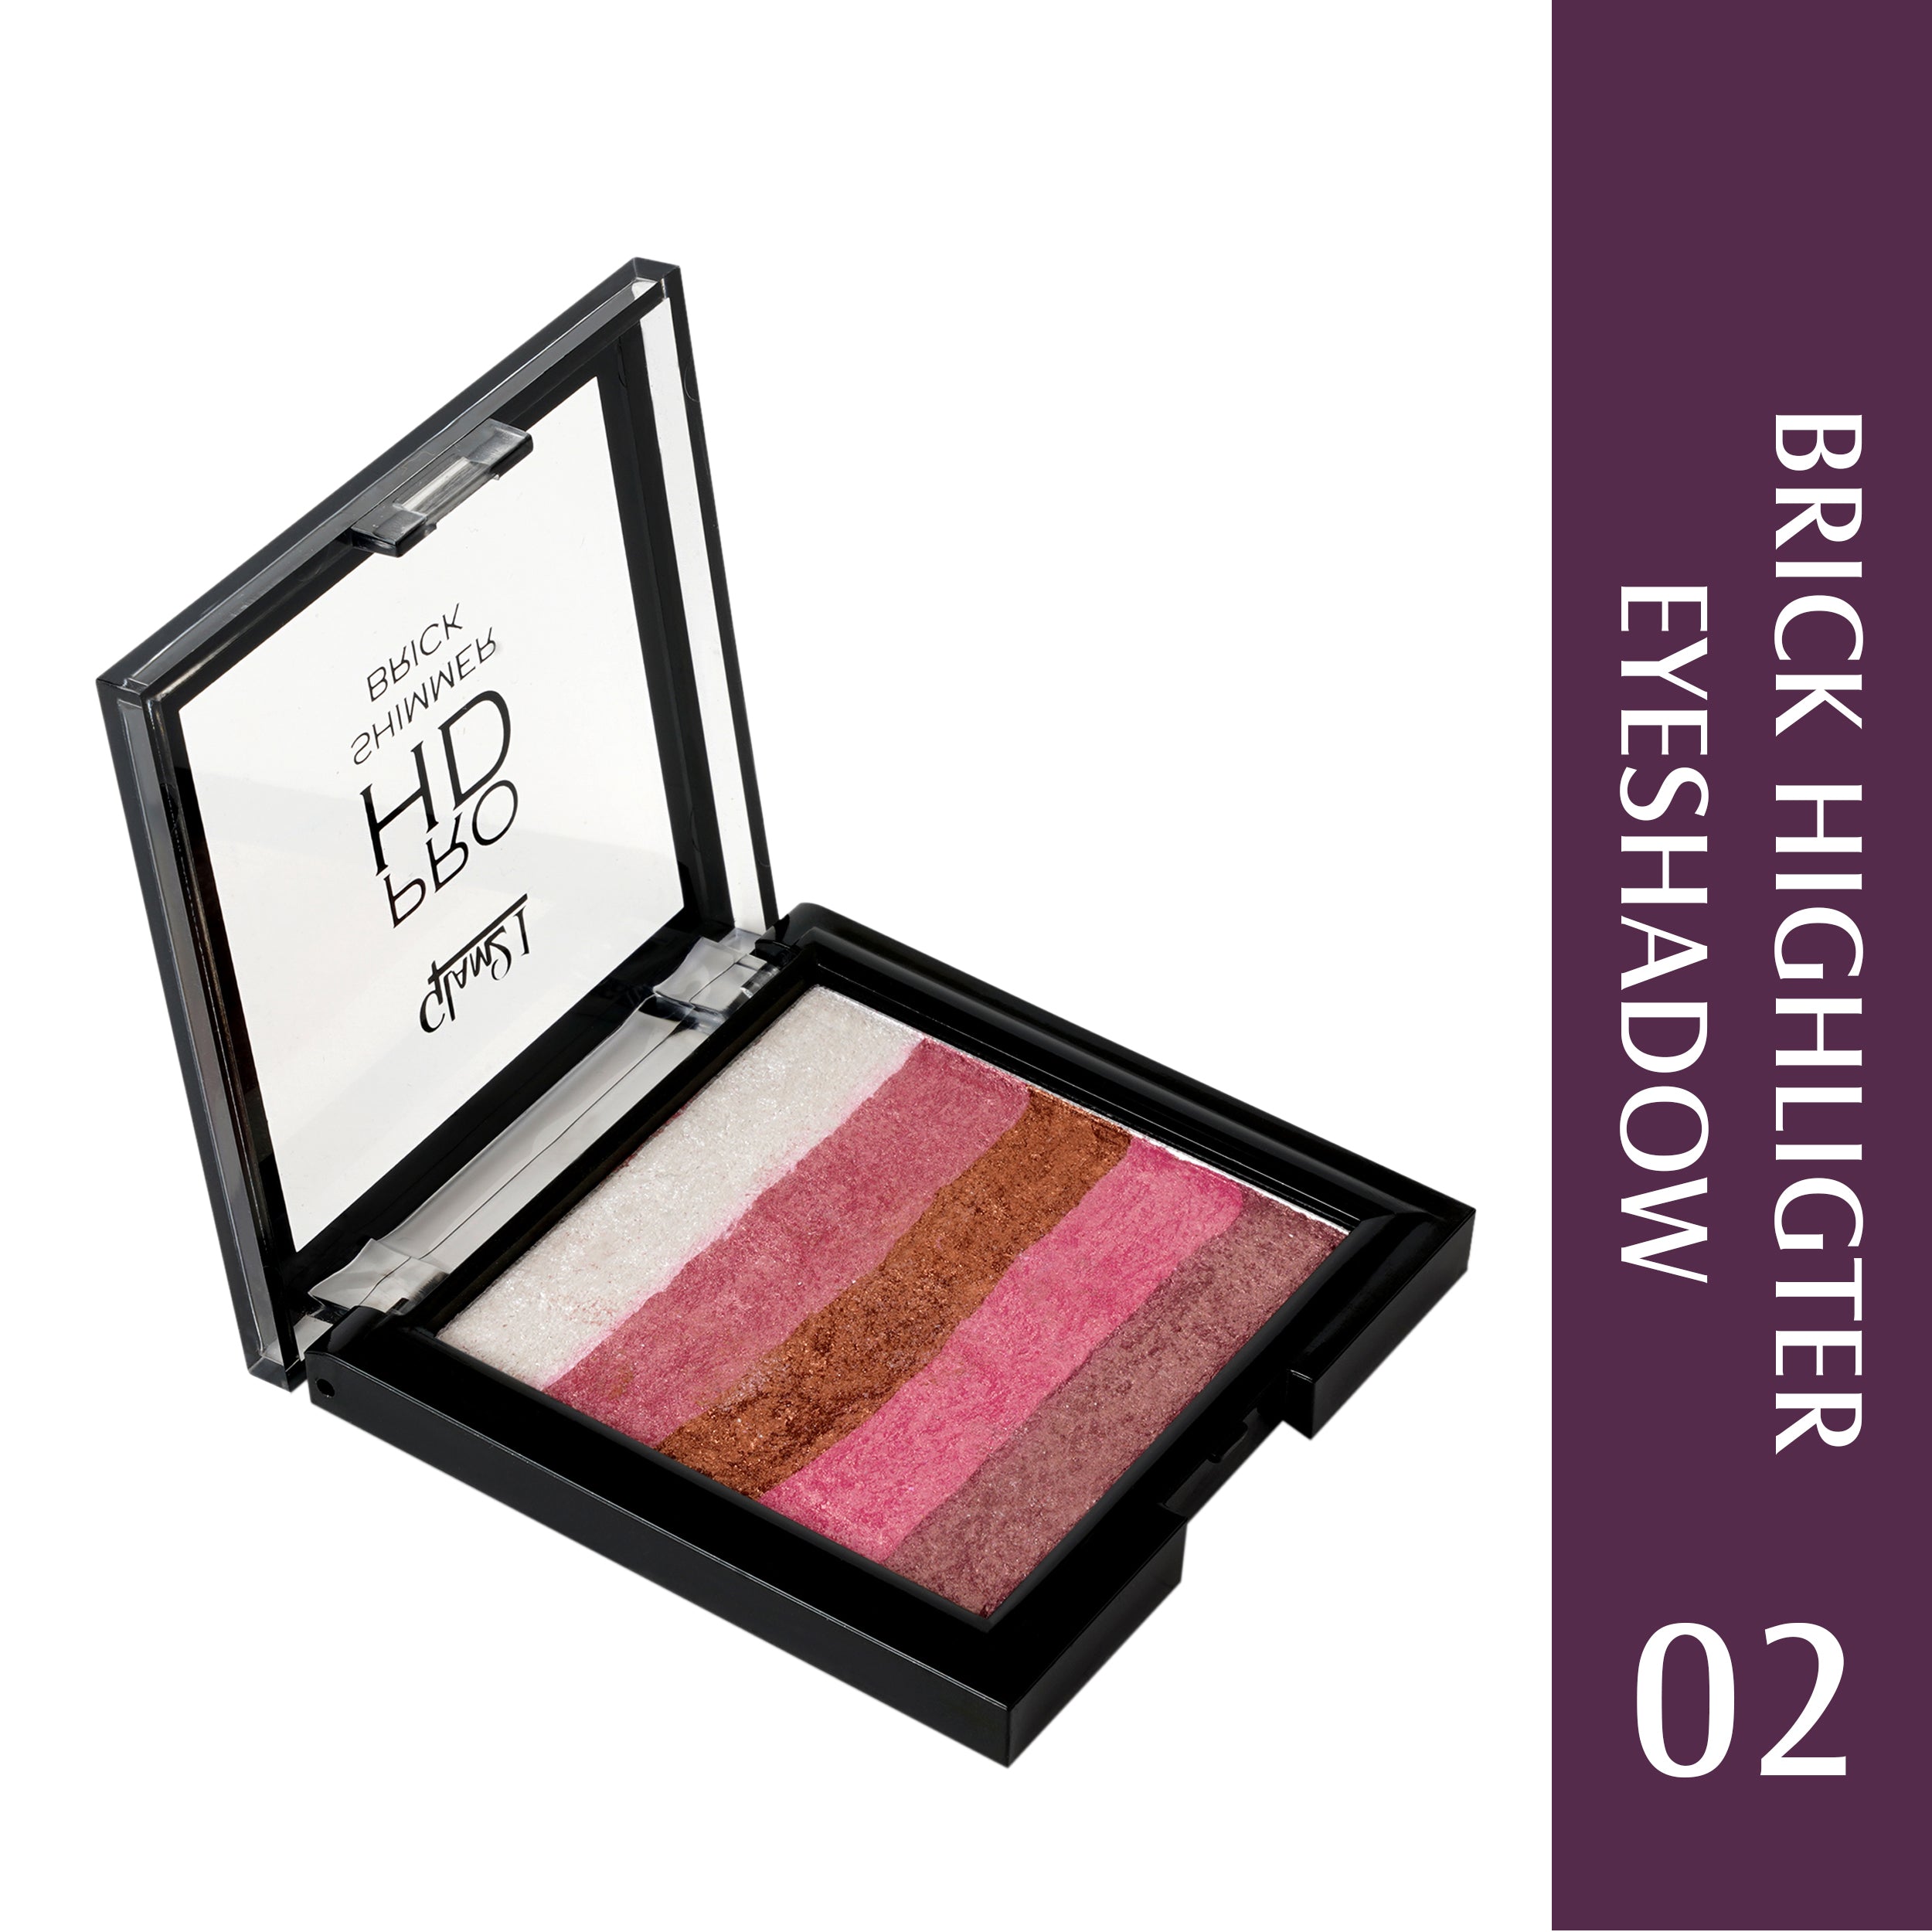 Glam21 Brick Eyeshadow Palette Long-Lasting| Shimmery Finish 5 Highly Pigmented Shades 7.5 g (Shade-02)